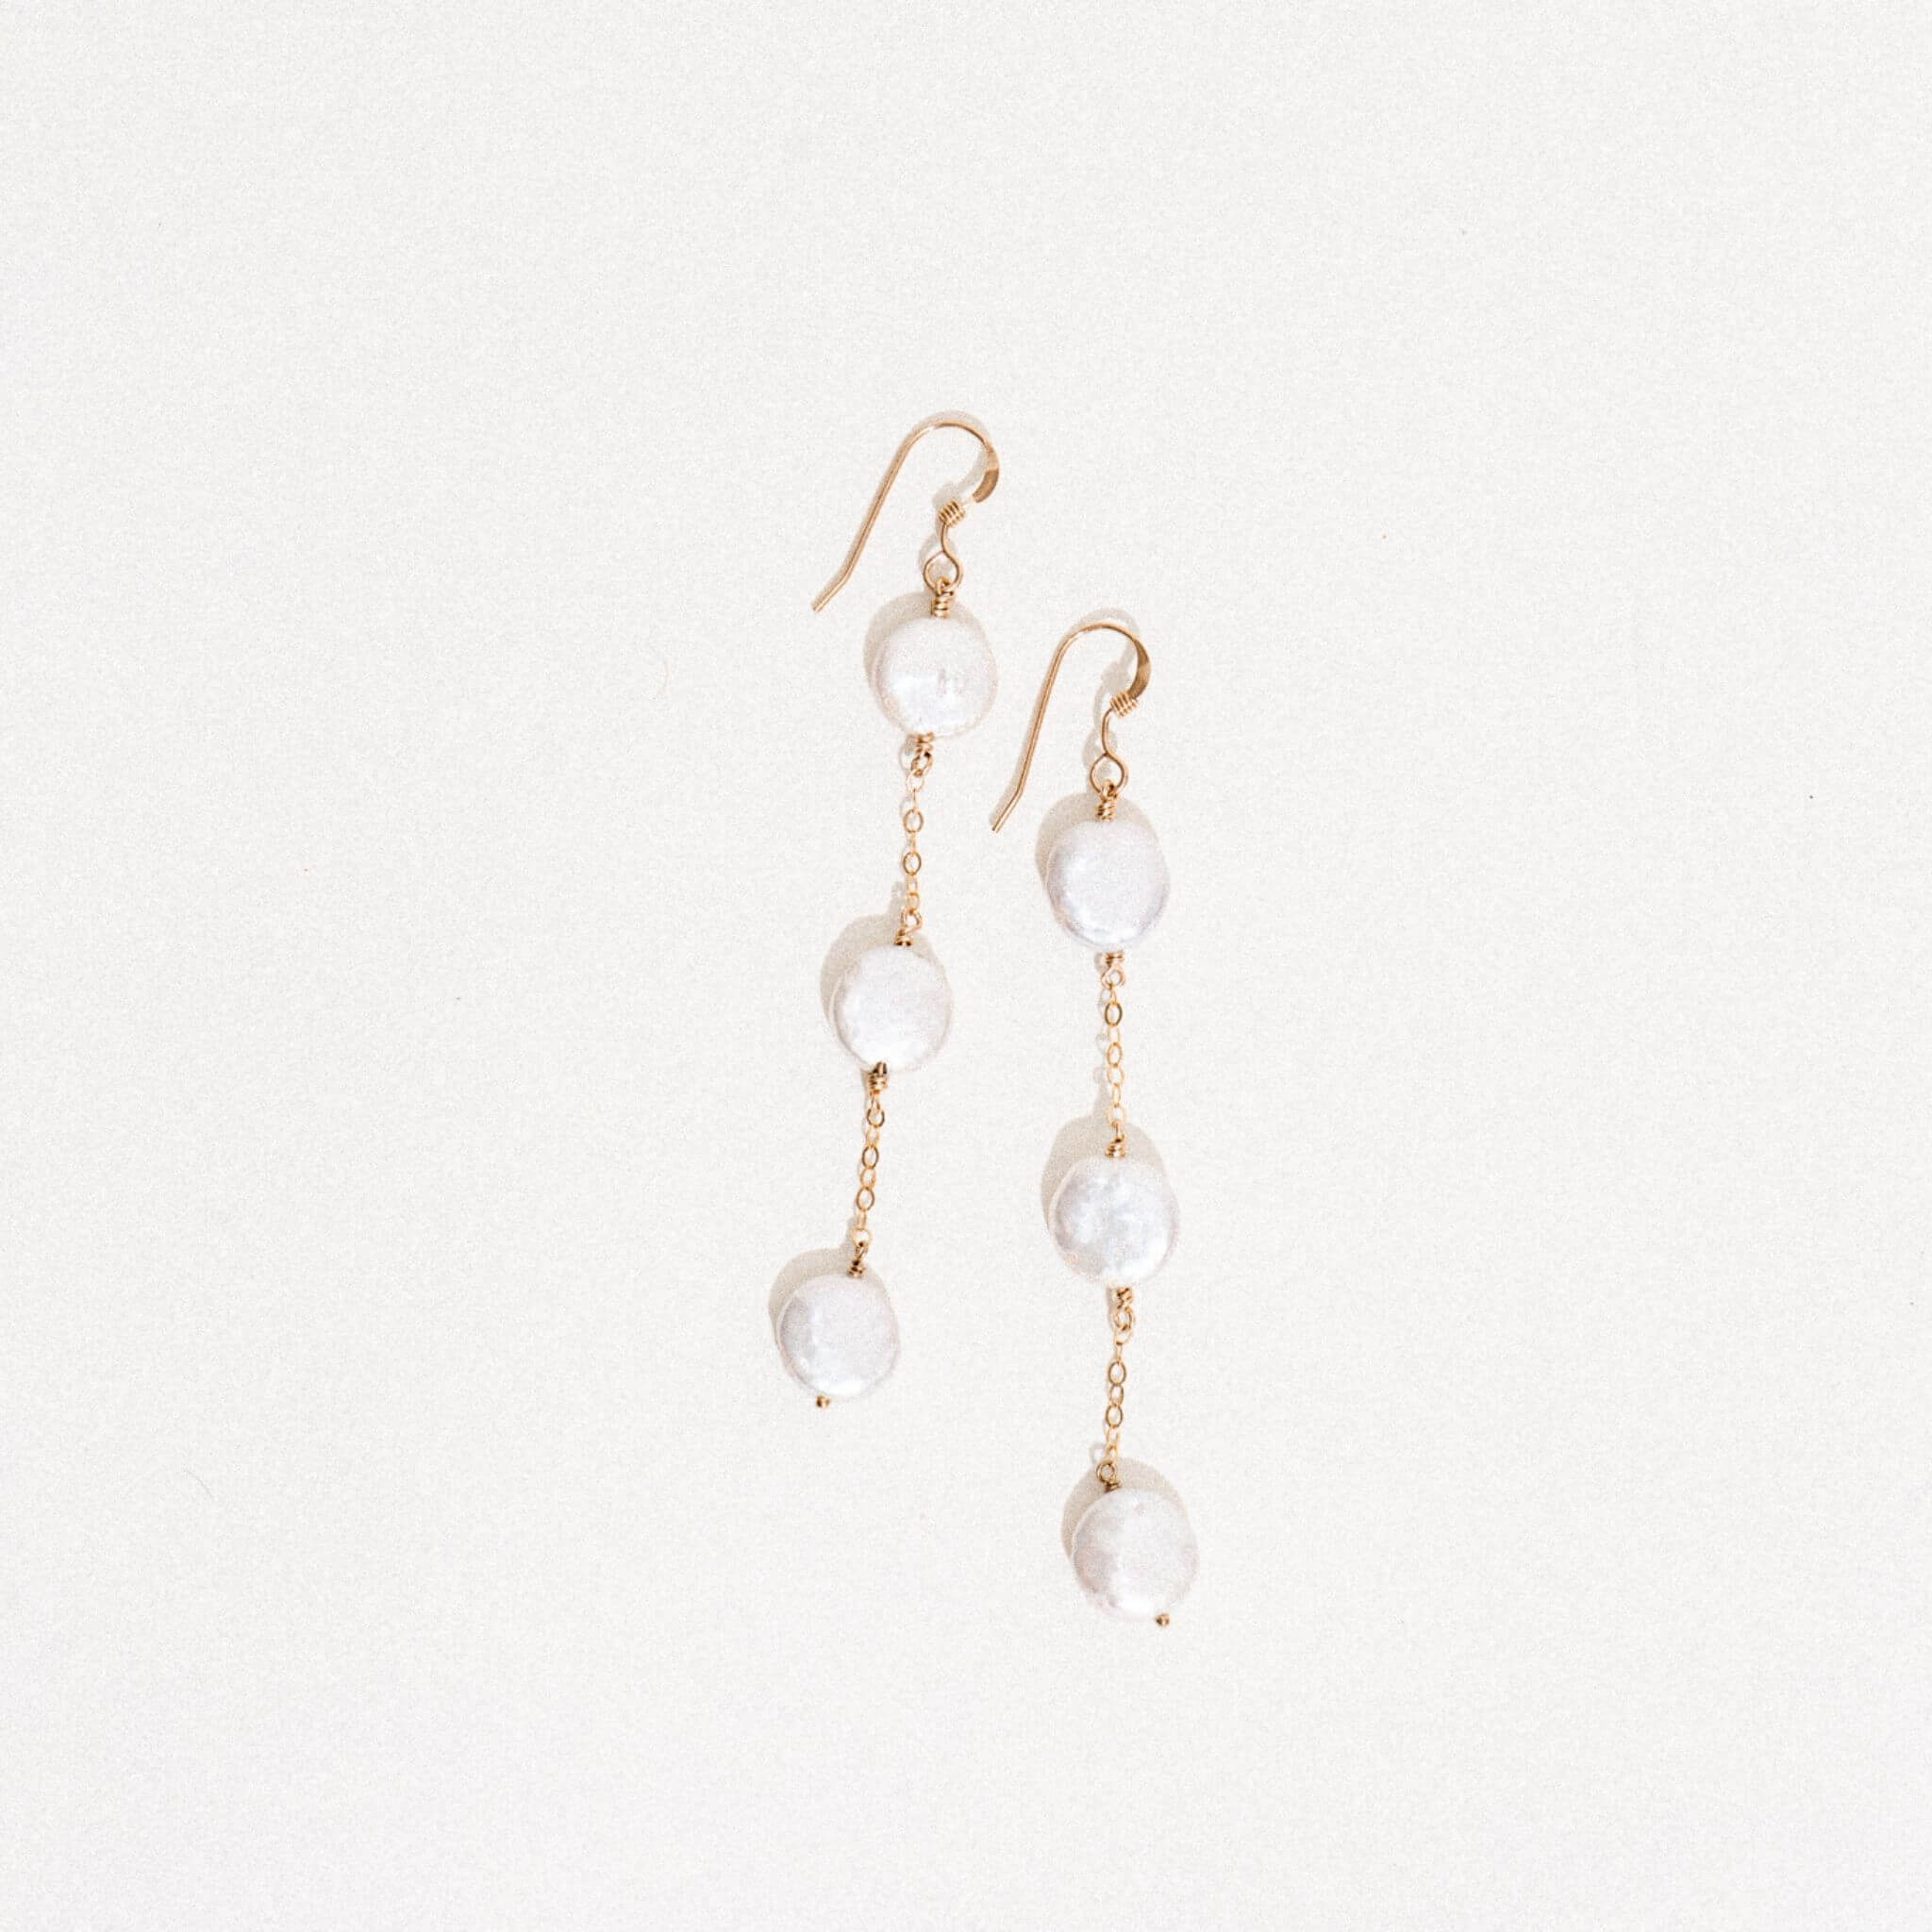 Thalia Pearl Earrings